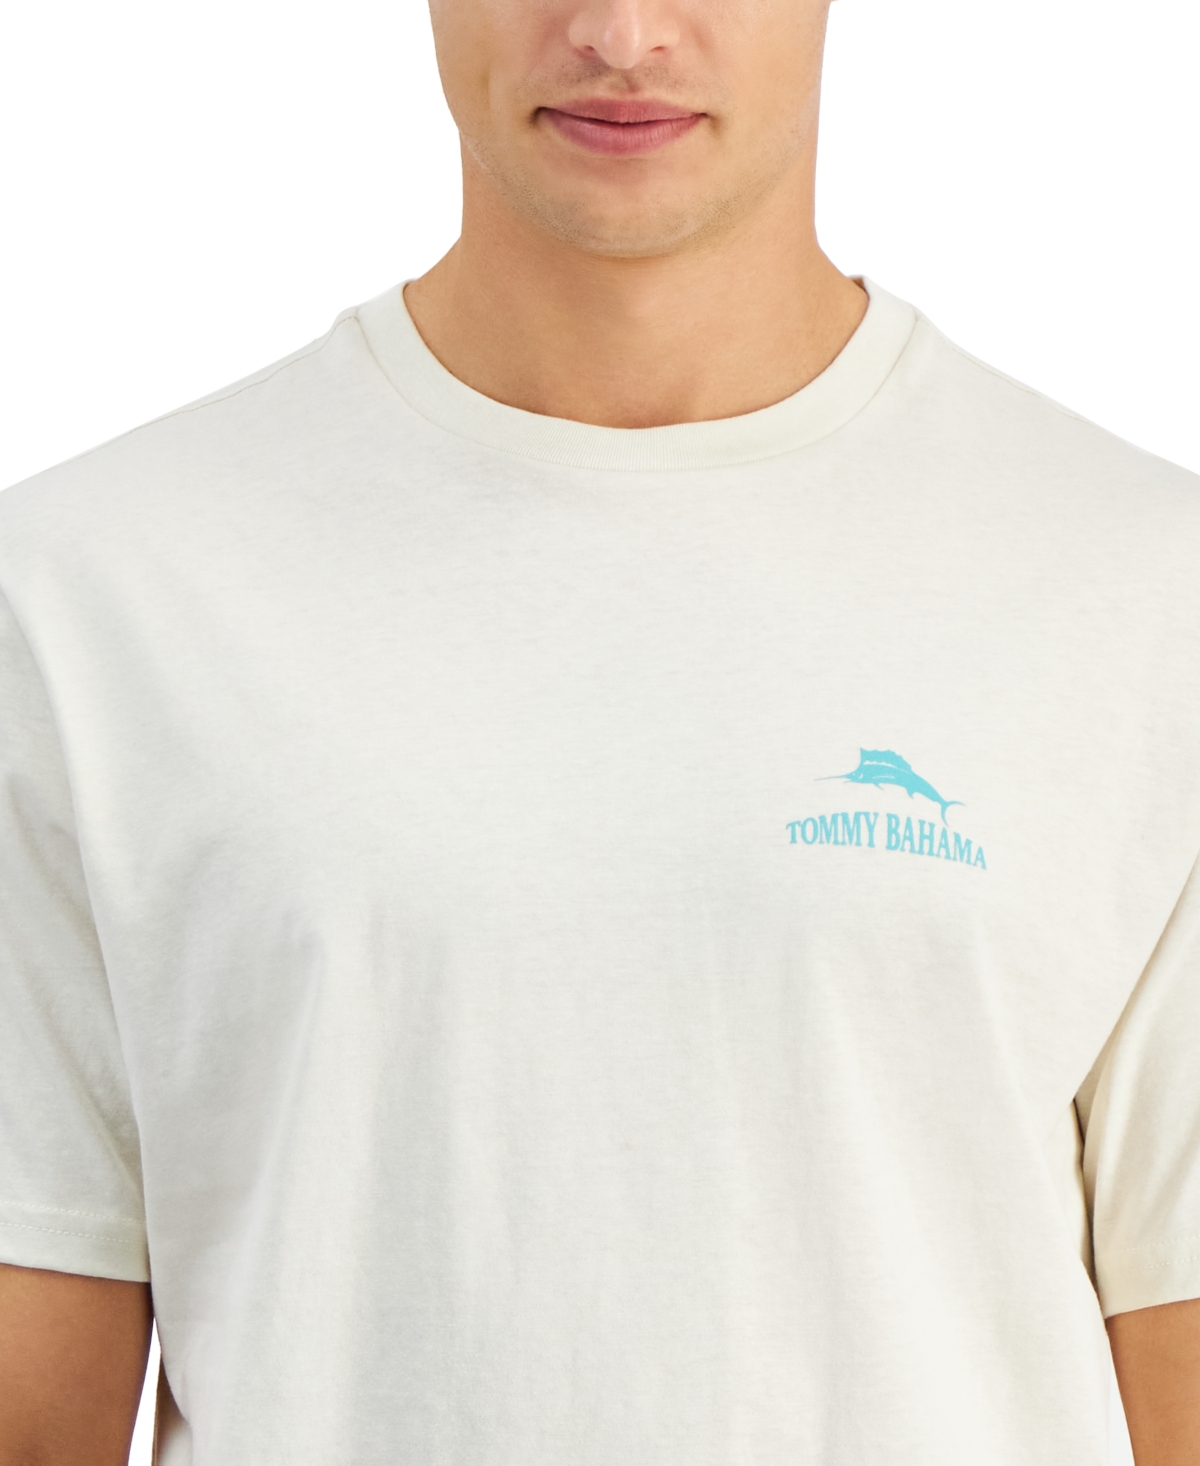 Men's Tommy Bahama Gray Miami Dolphins Thirst & Gull T-Shirt